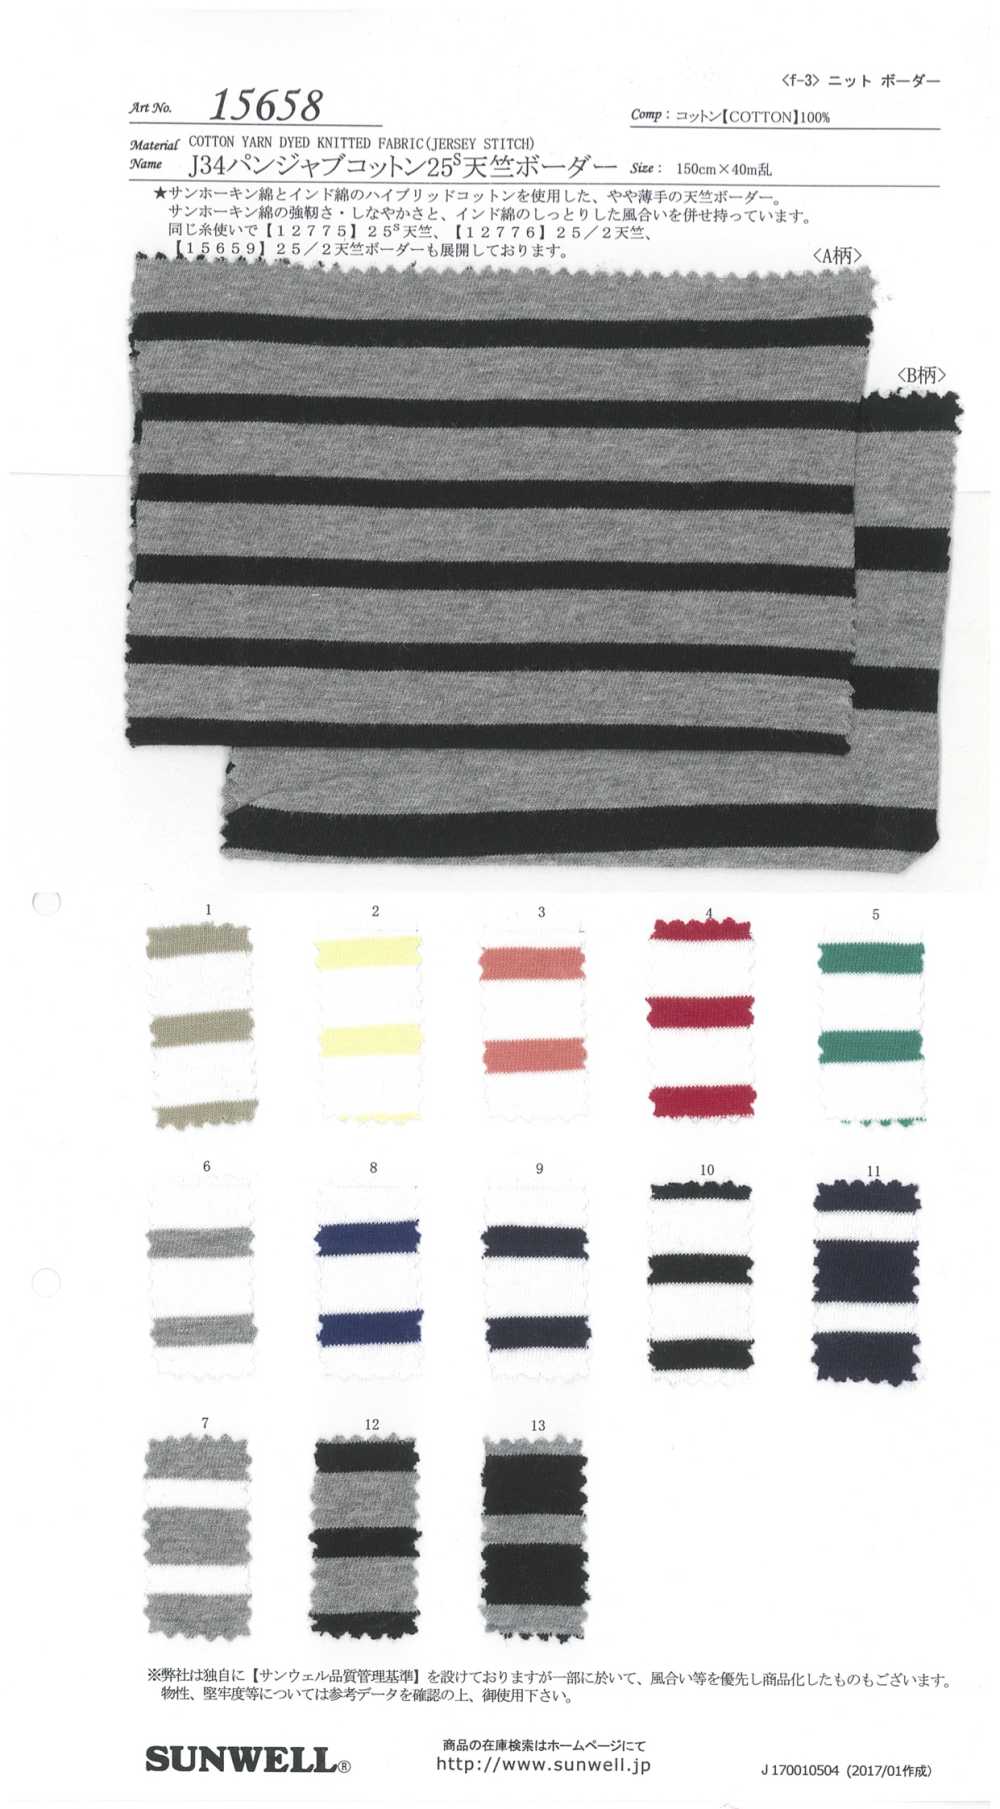 15658 [OUTLET] J34 Punjab Baumwolle 25 Einzelfaden Tianzhu Baumwolle Horizontale Streifen[Textilgewebe] SUNWELL